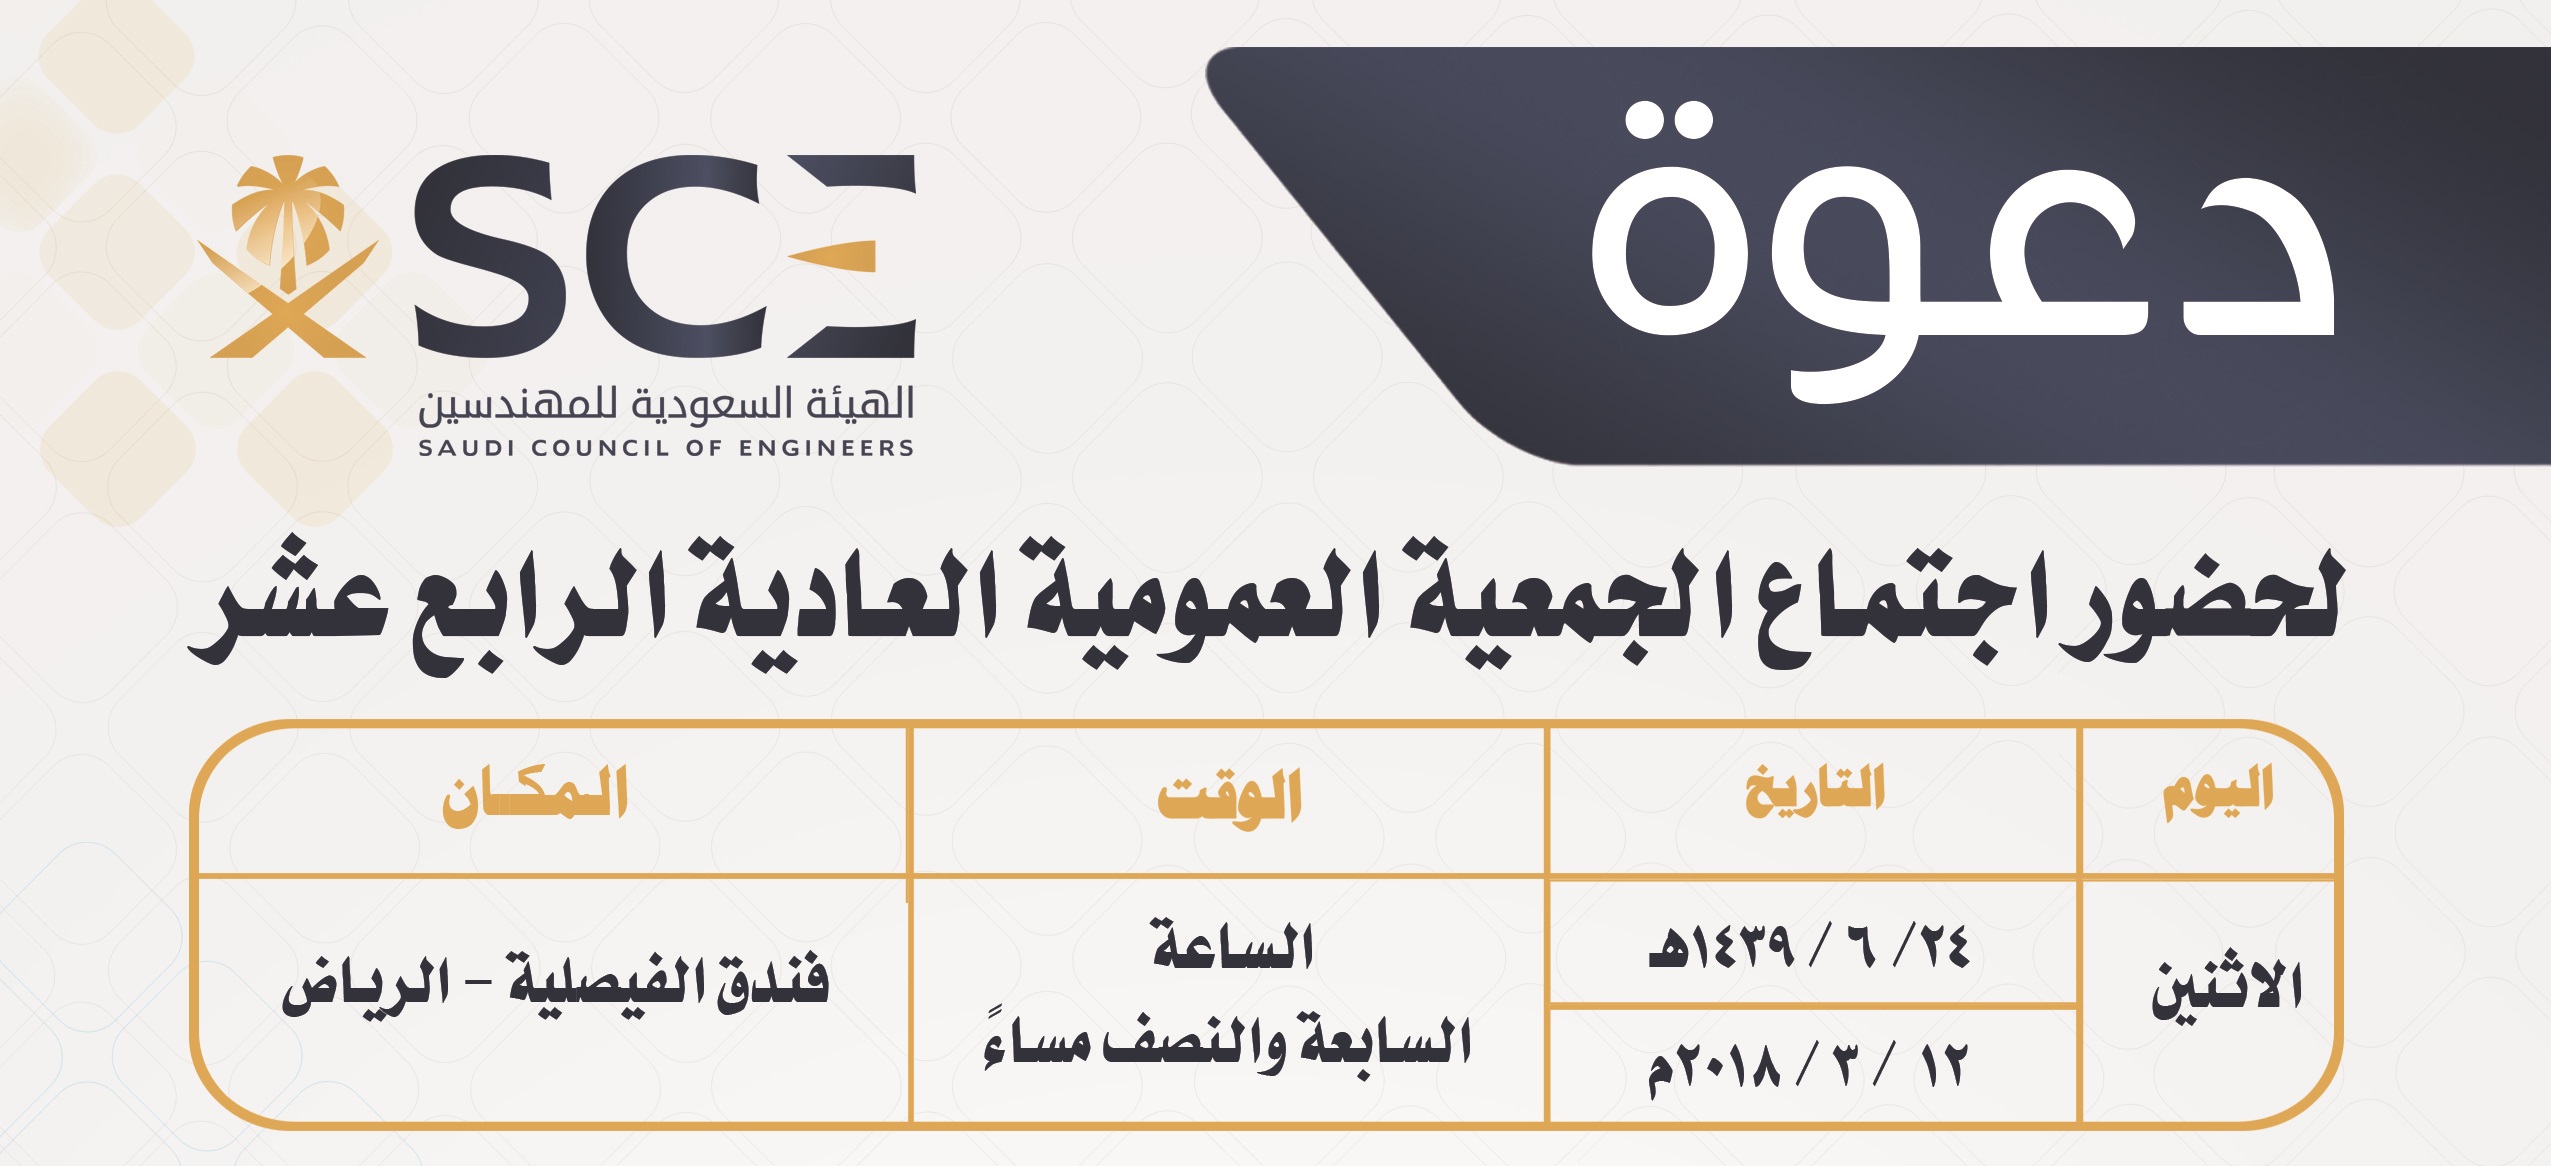 Saudi council of engineers login account